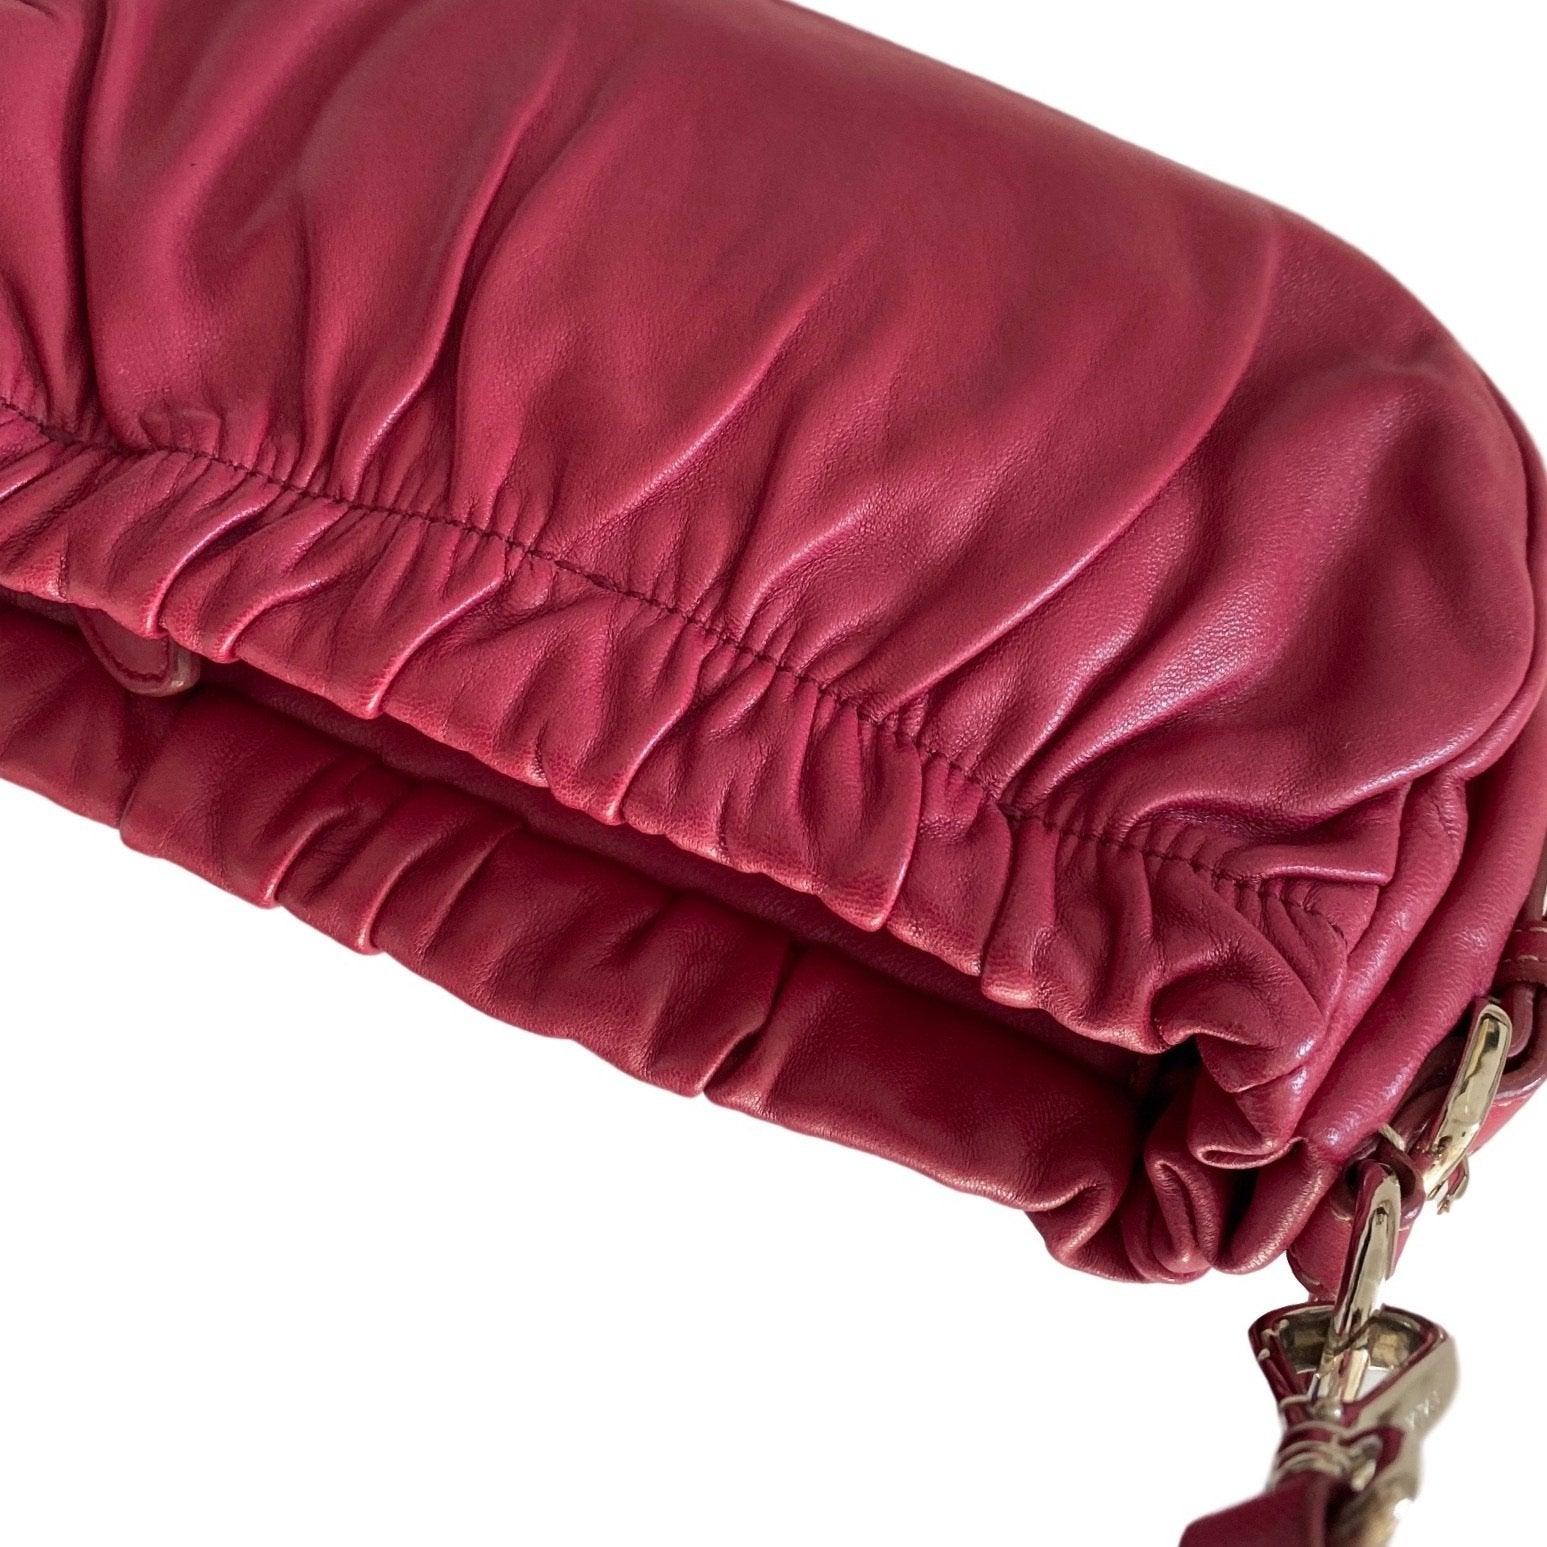 Prada Pink Leather Mini Bow Shoulder Bag - Handbags